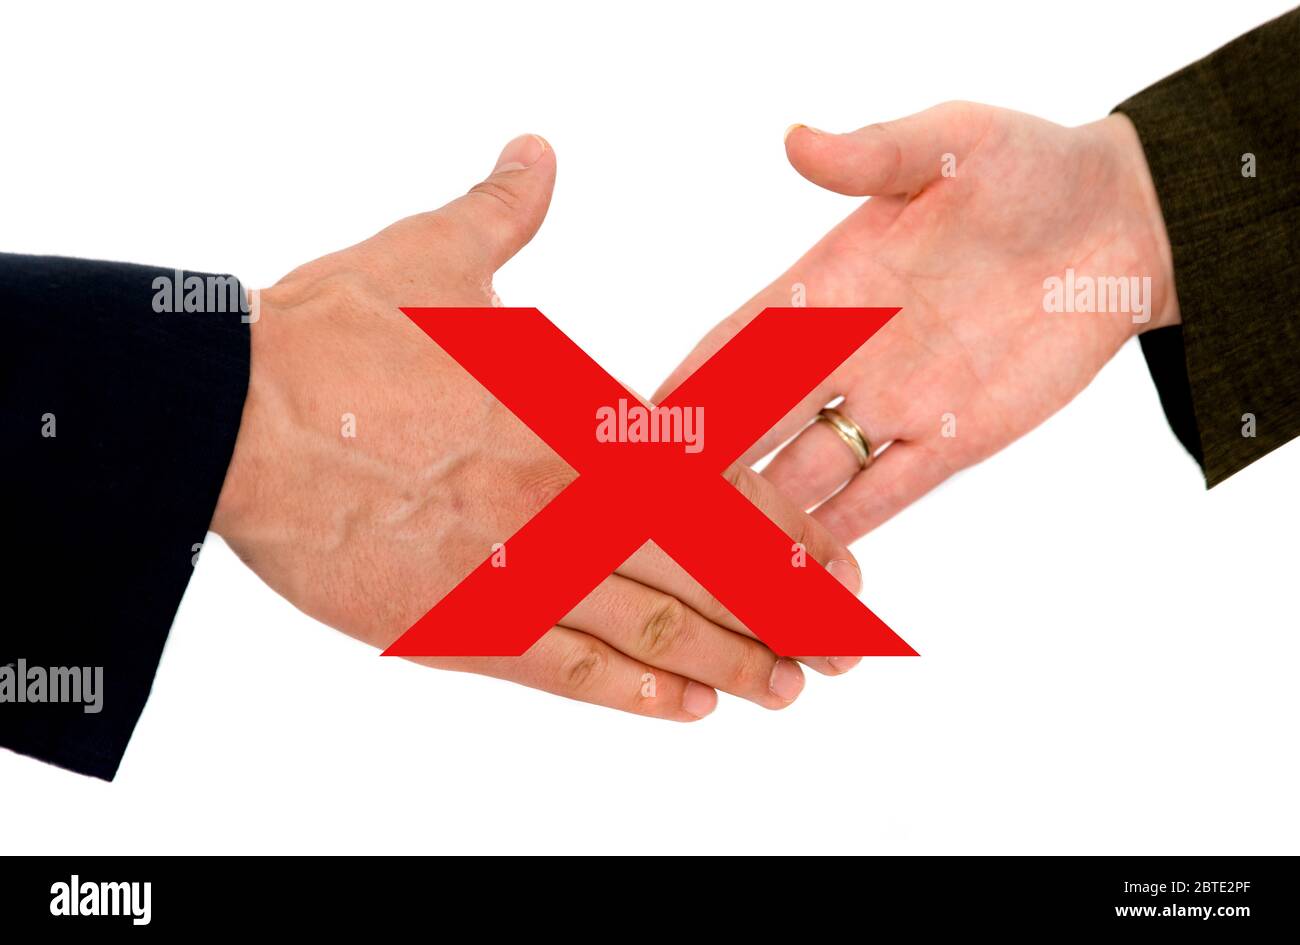 prohibition to shake hands, risk of infection, coronavirus Stock Photo